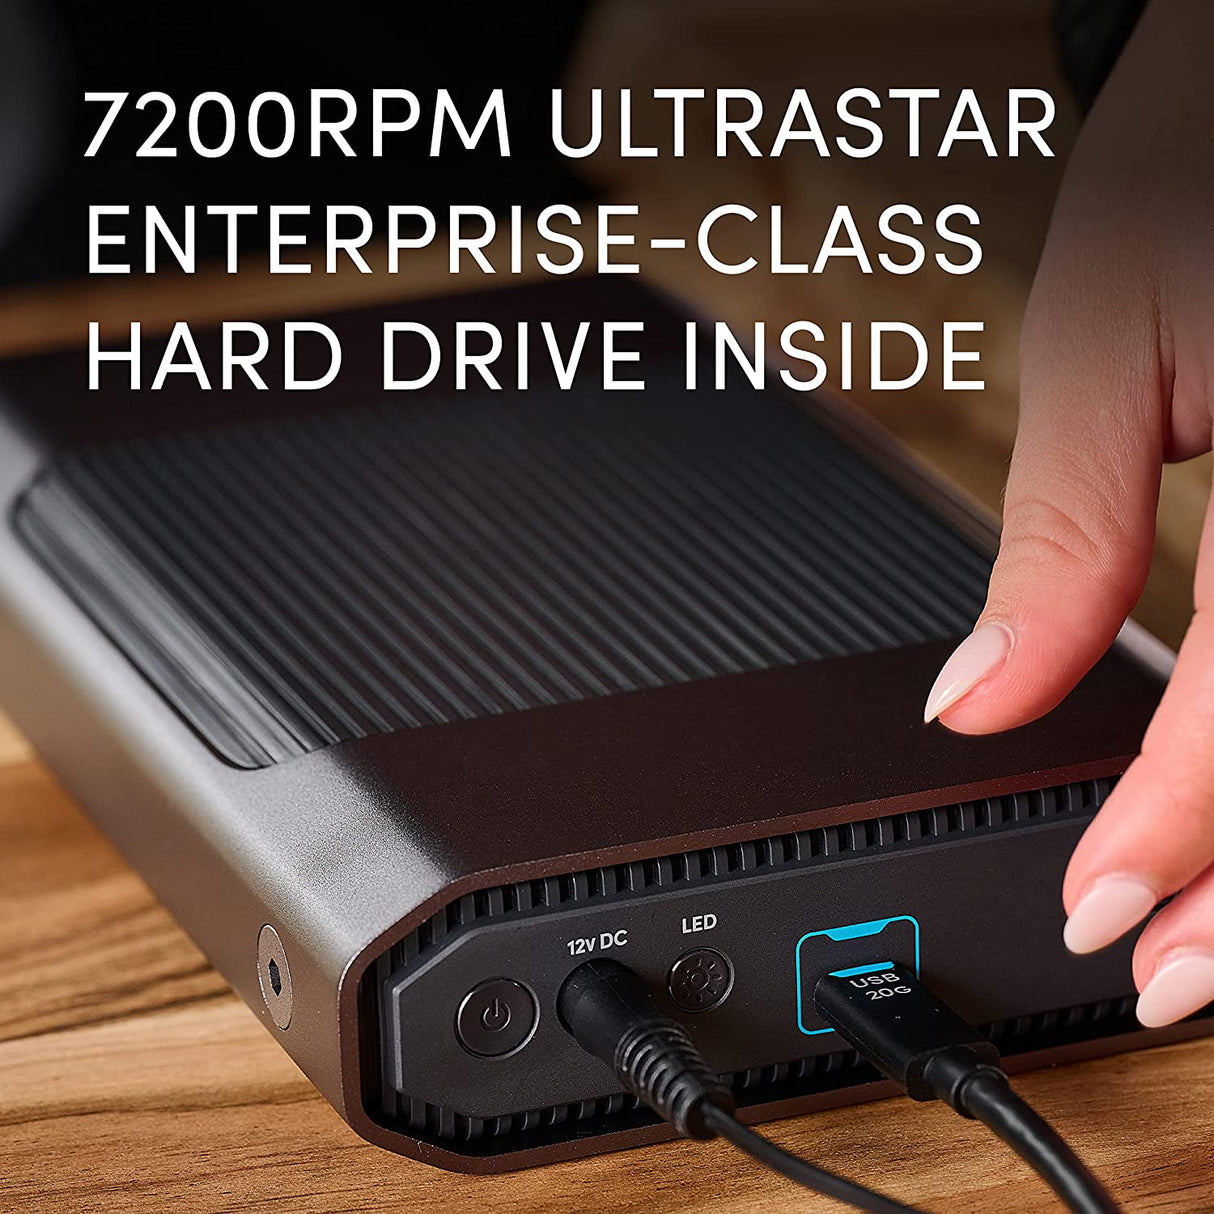 SanDisk Professional 18TB G-Drive Enterprise-Class External Desktop Hard Drive - 7200RPM Ultrastar HDD Inside, USB-C (10Gbps), USB 3.2 Gen 2, Mac Ready - SDPHF1A-018T-NBAAD New Generation 18TB